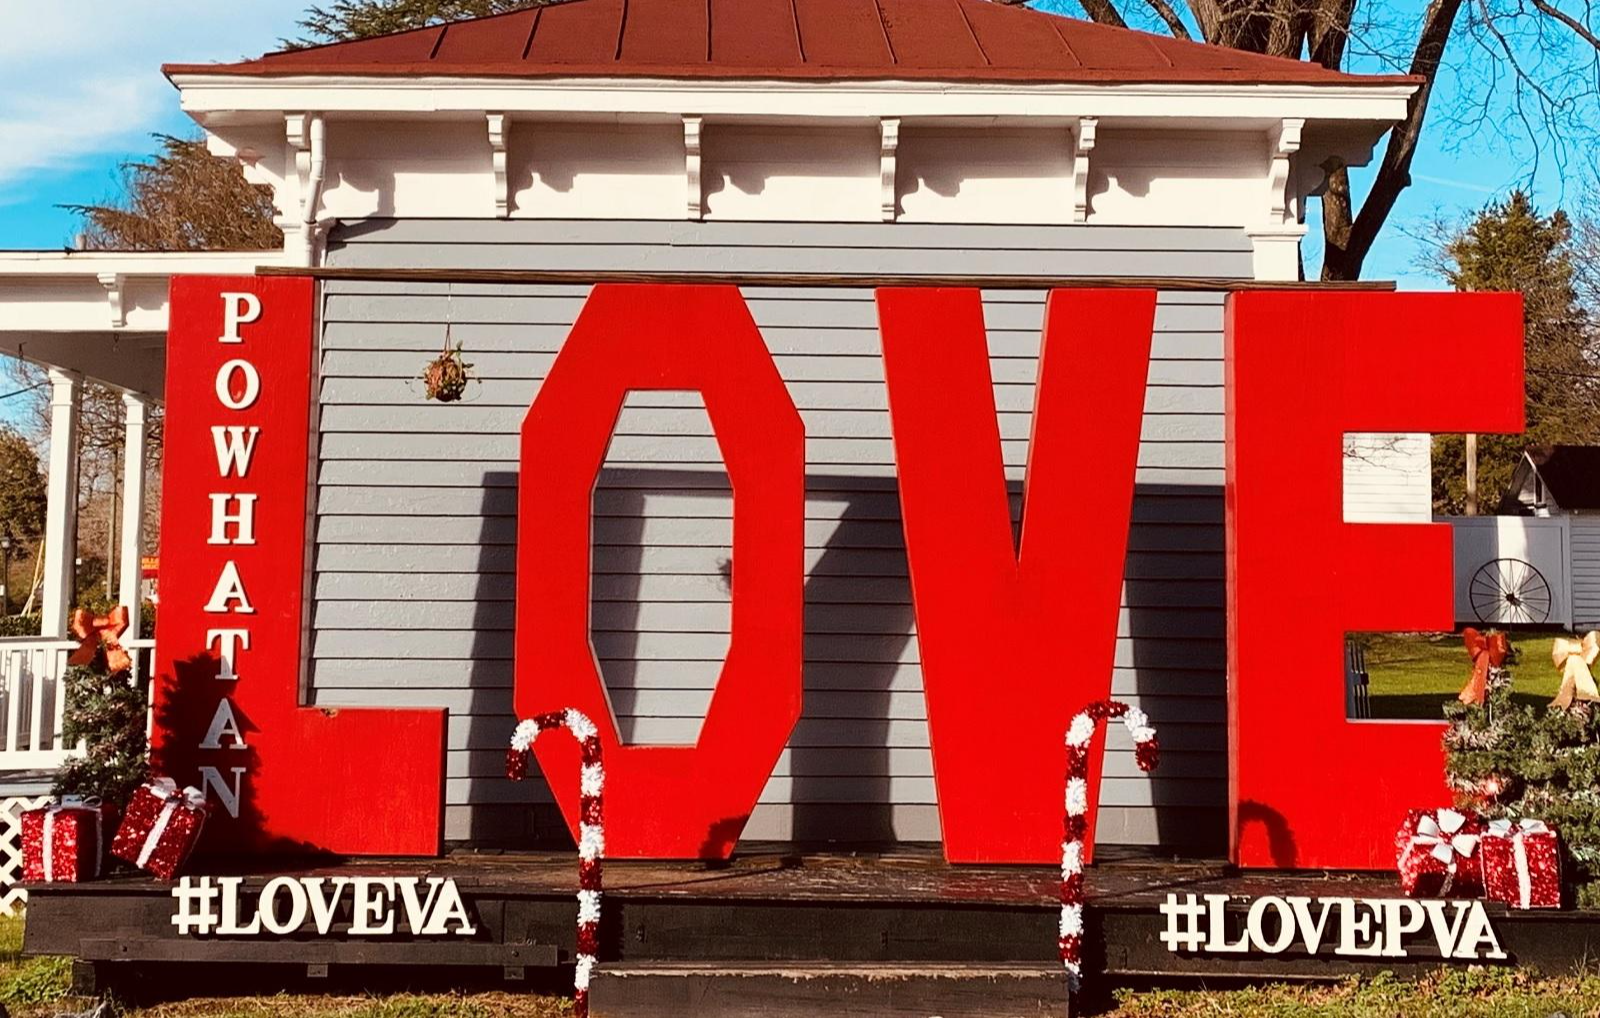 LOVE sign in Powhatan Virginia